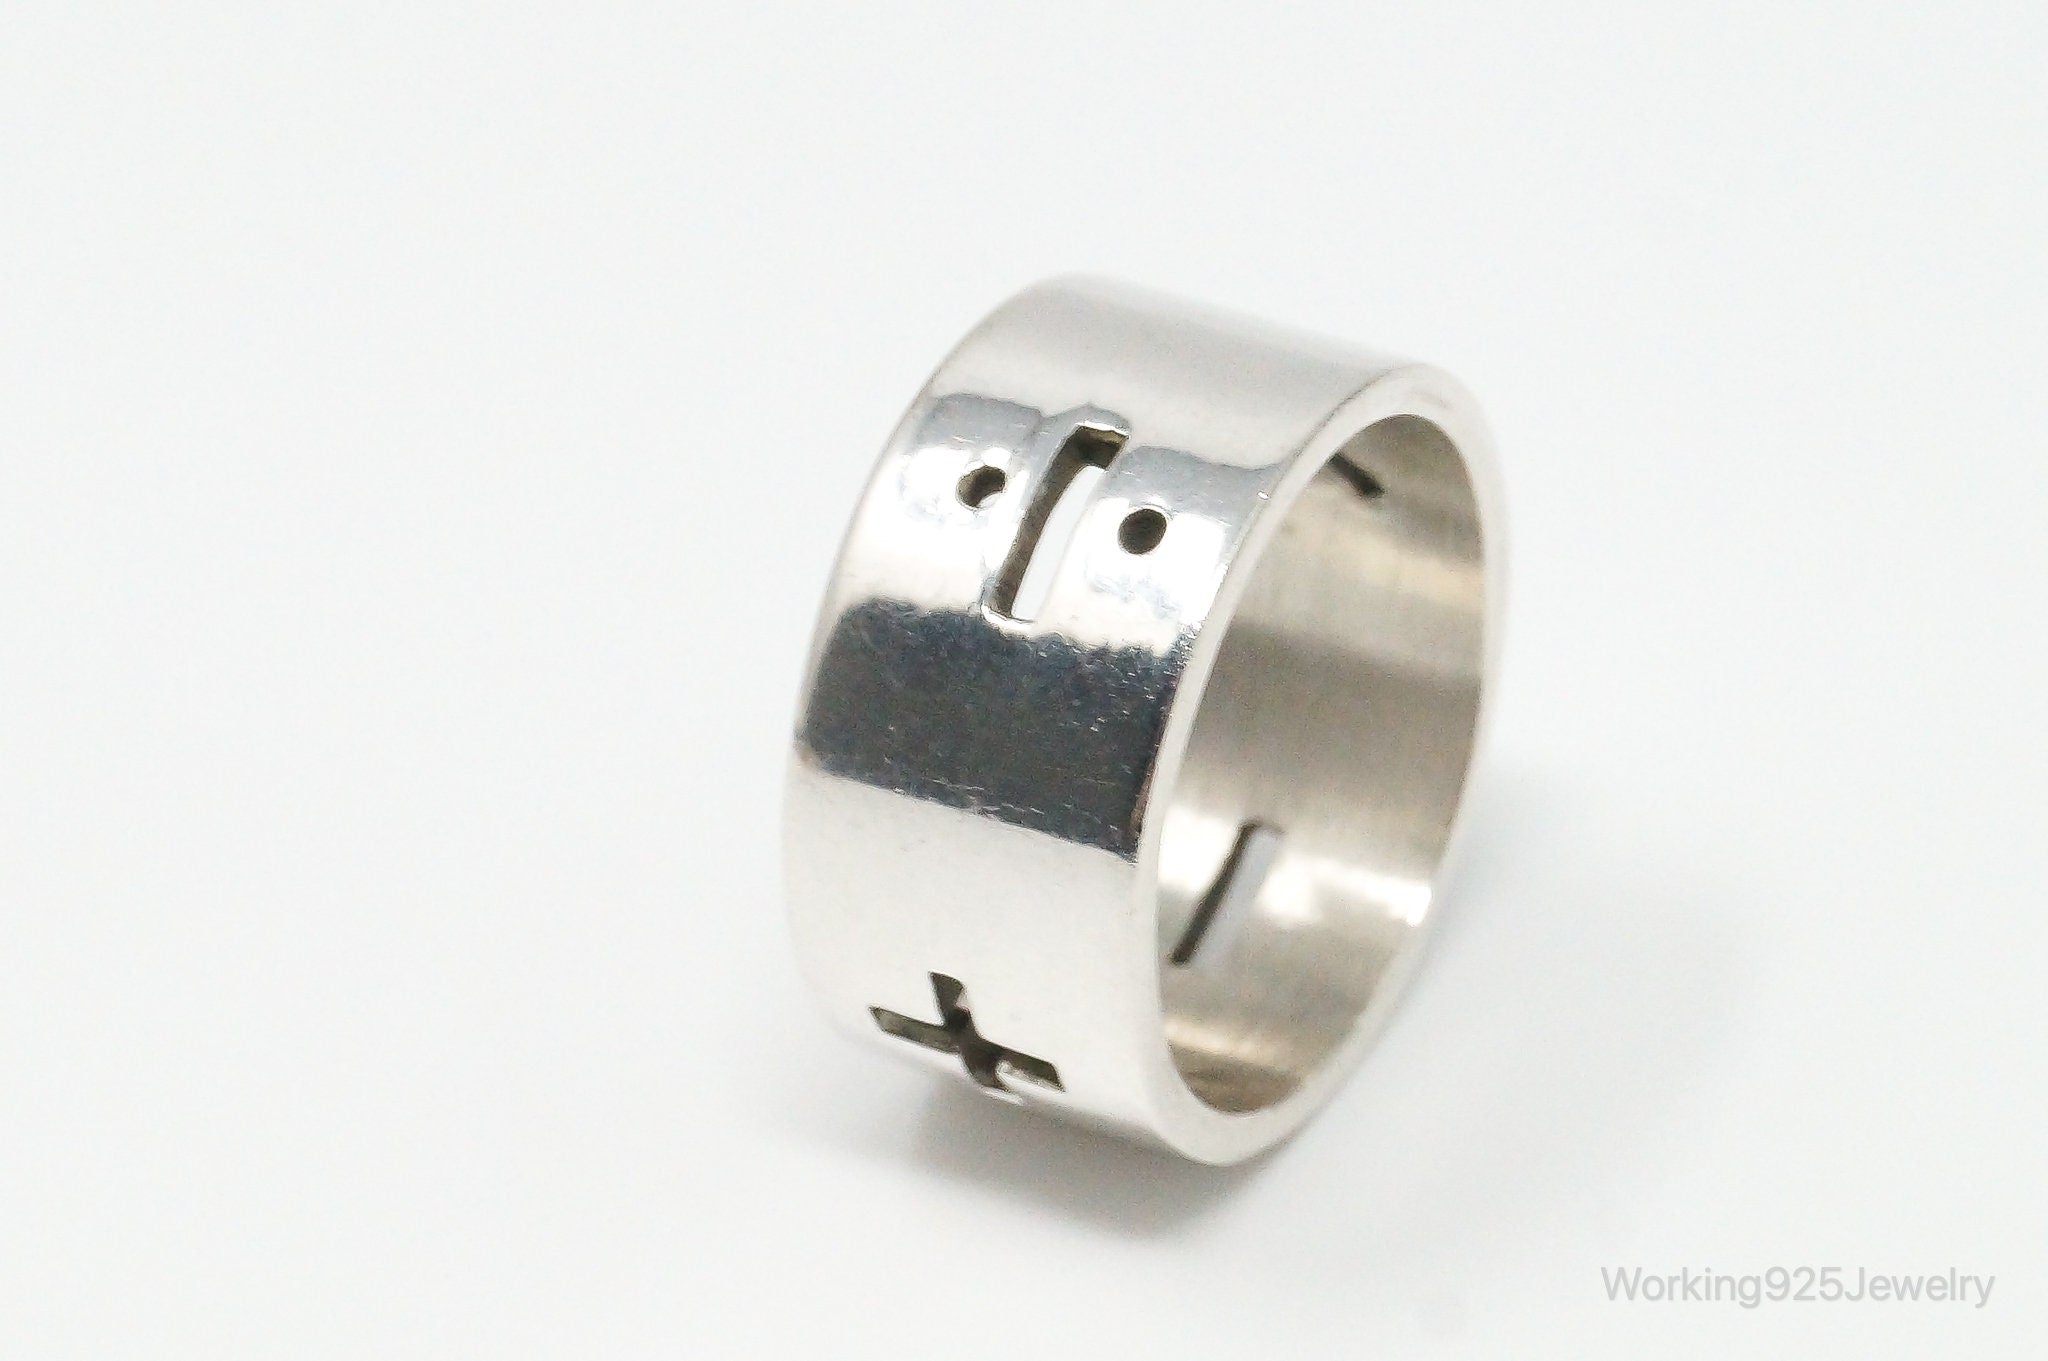 Sleek Modern Basic Mathematical Symbols Sterling Silver Band Ring - Size 8.25